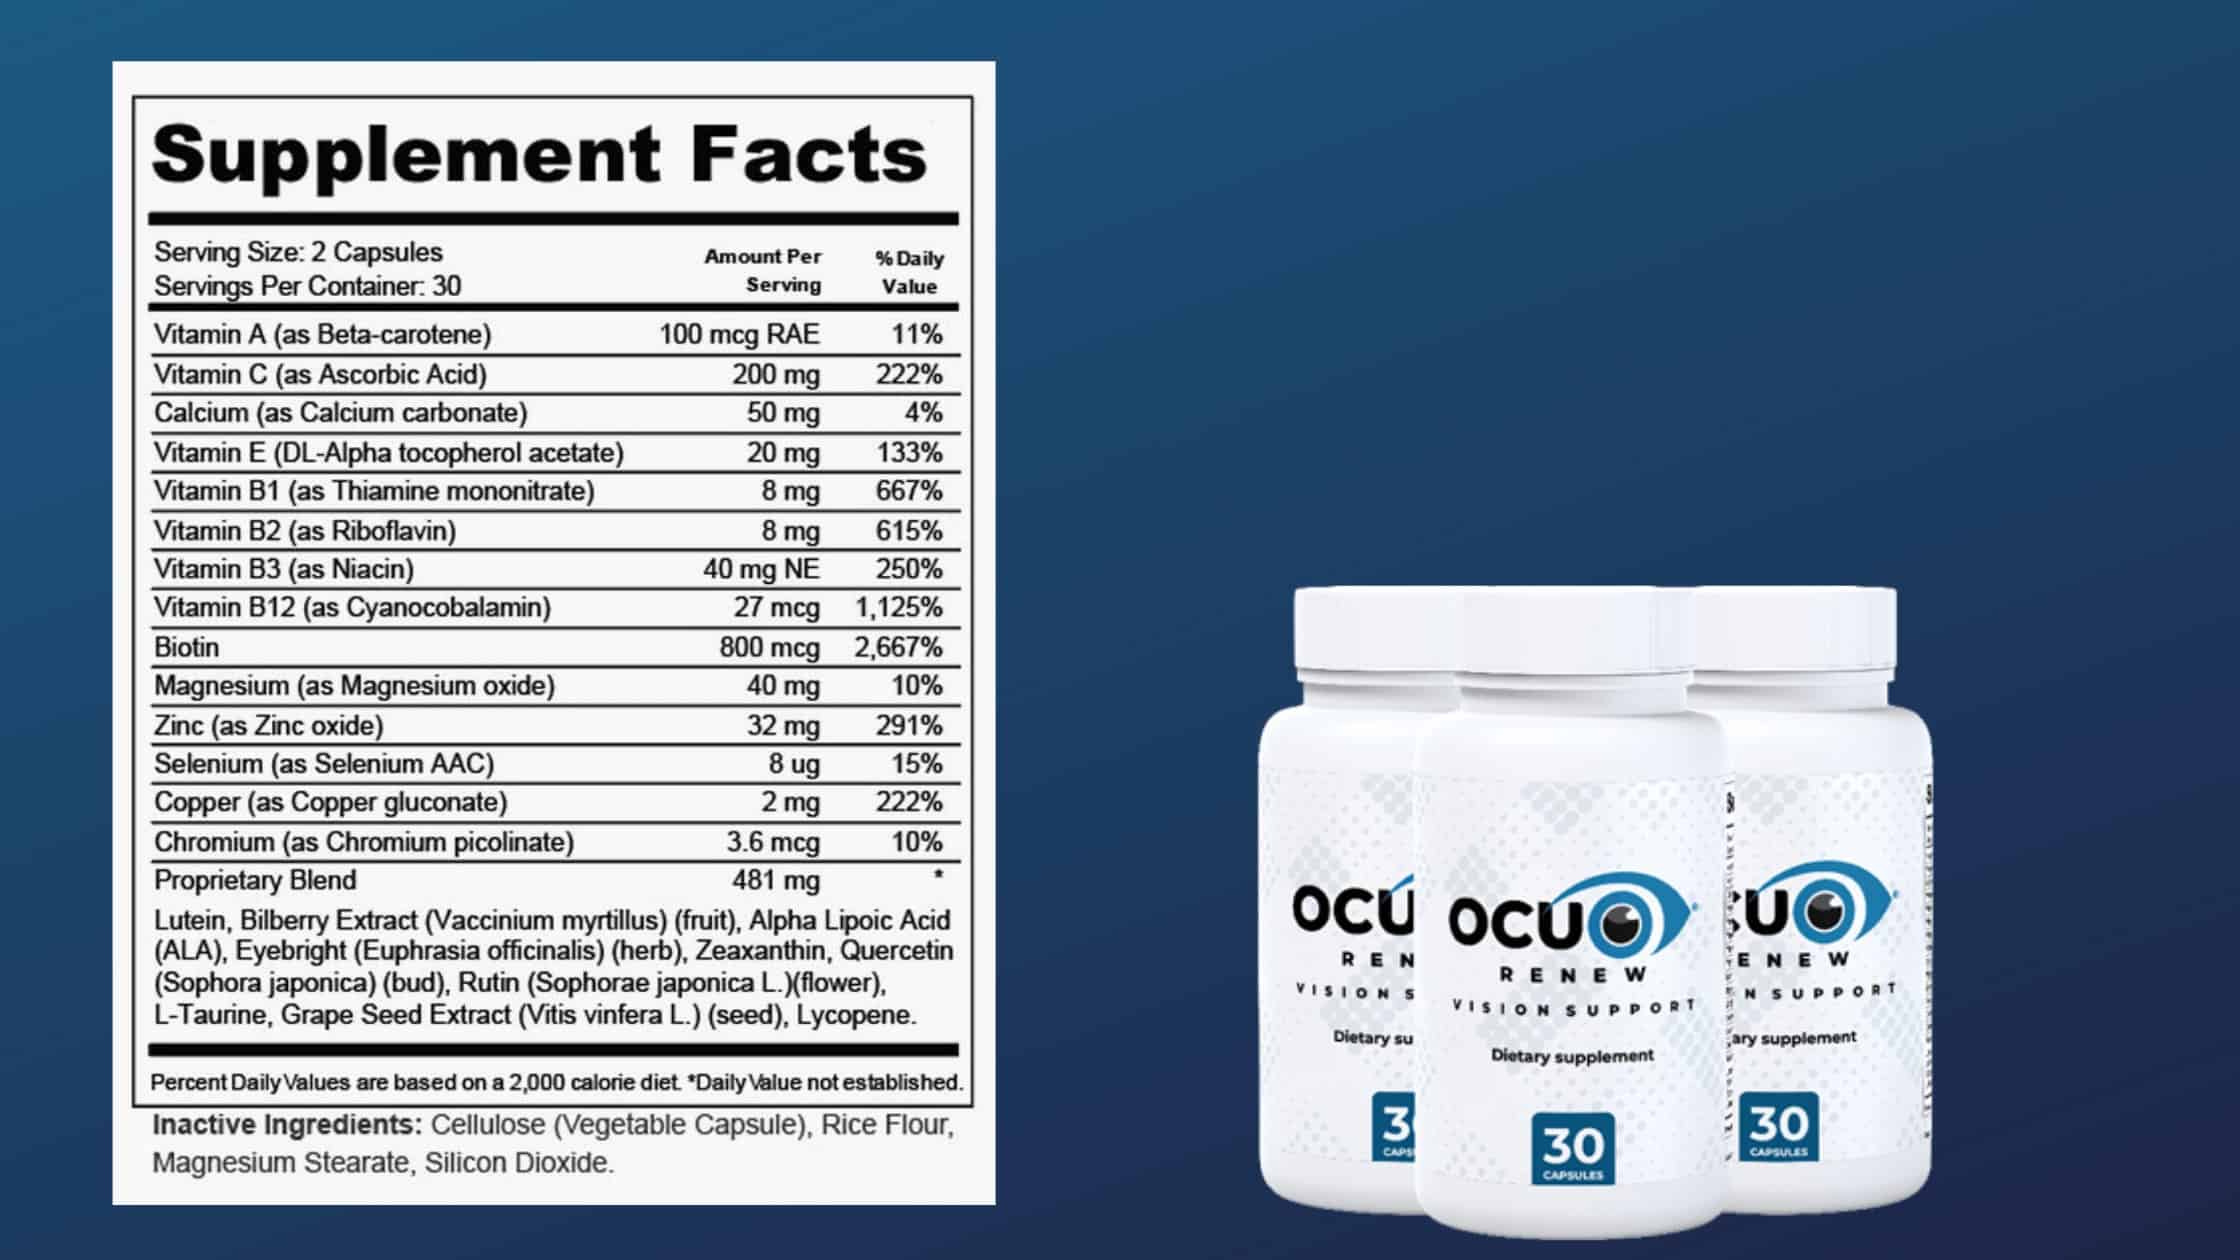 OcuRenew Dosage & Usage